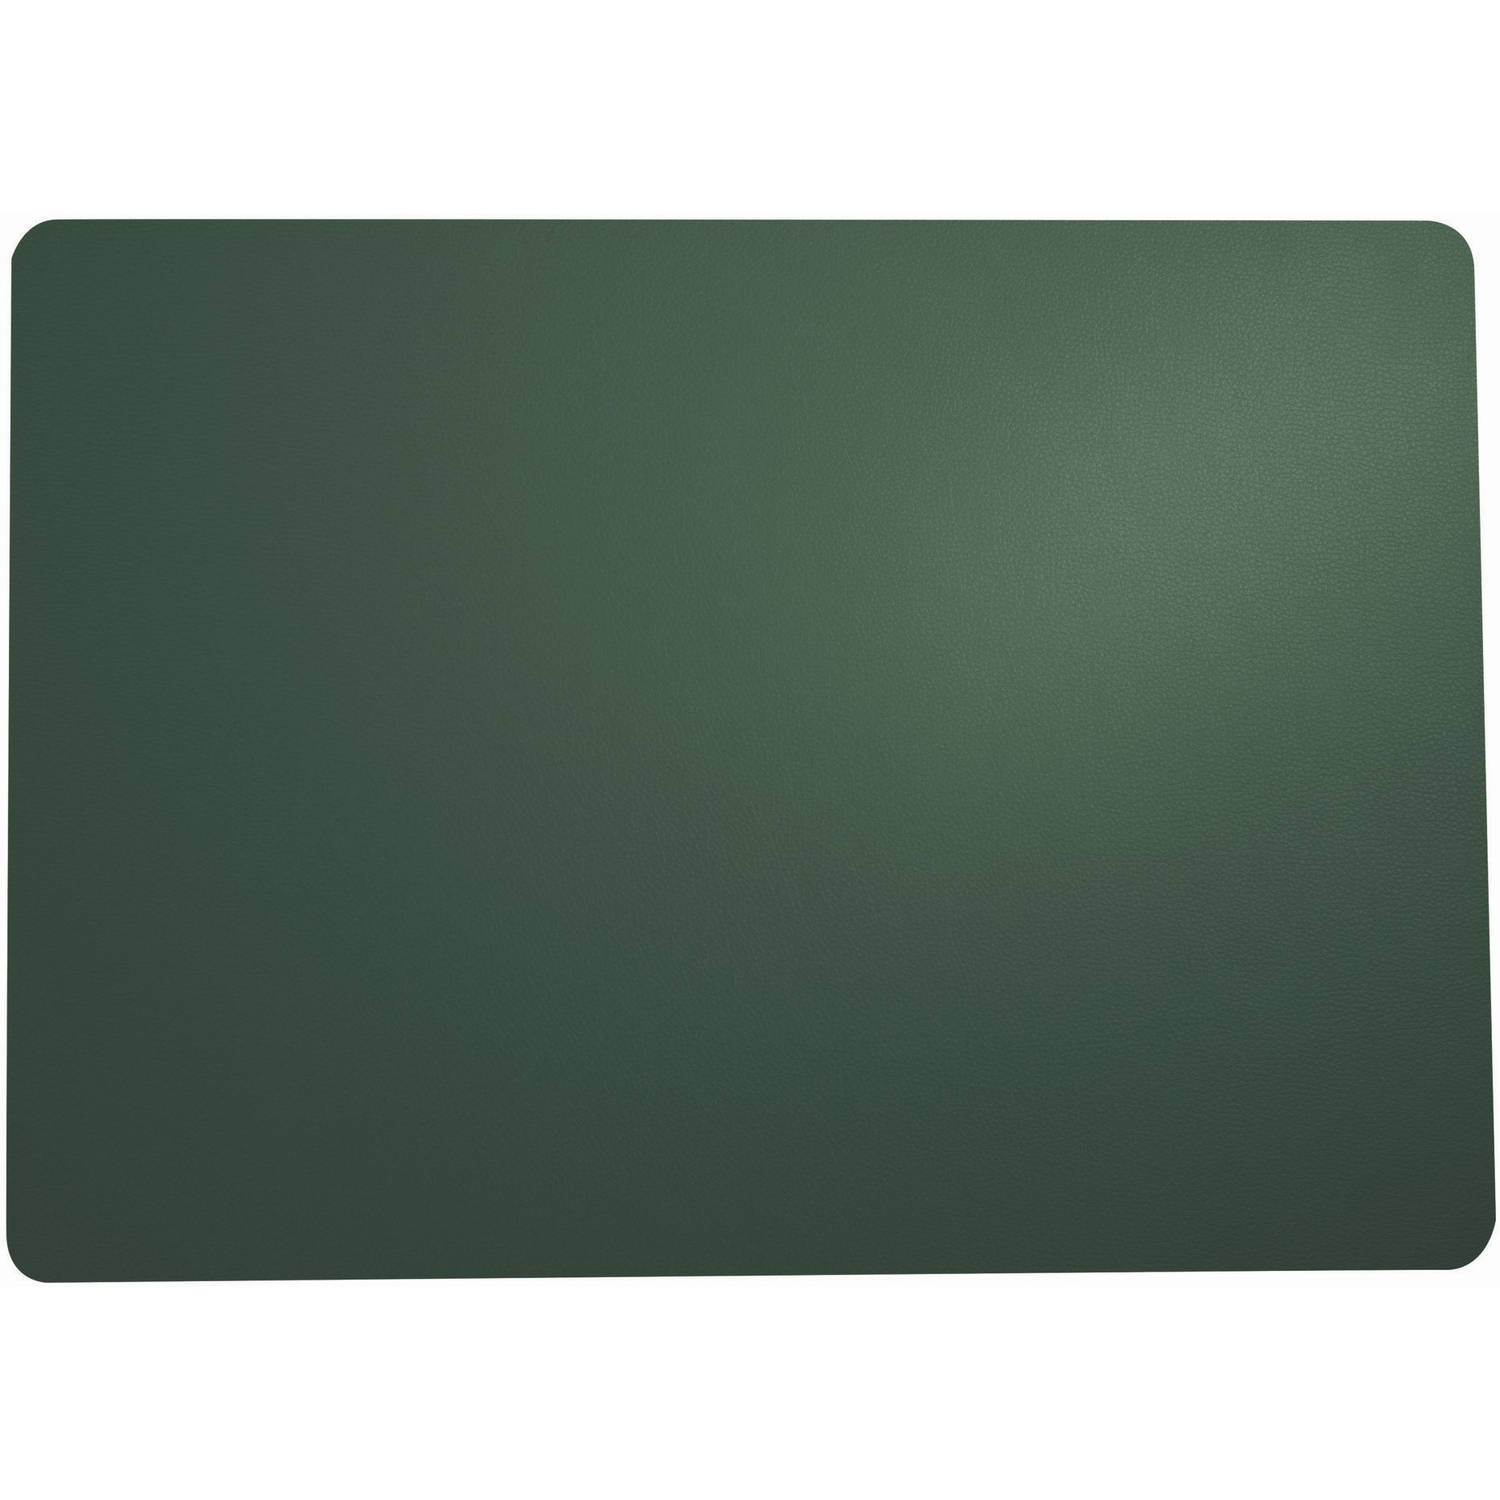 ASA Selection Placemat - Leather Optic Fine - Kale - 46 x 33 cm